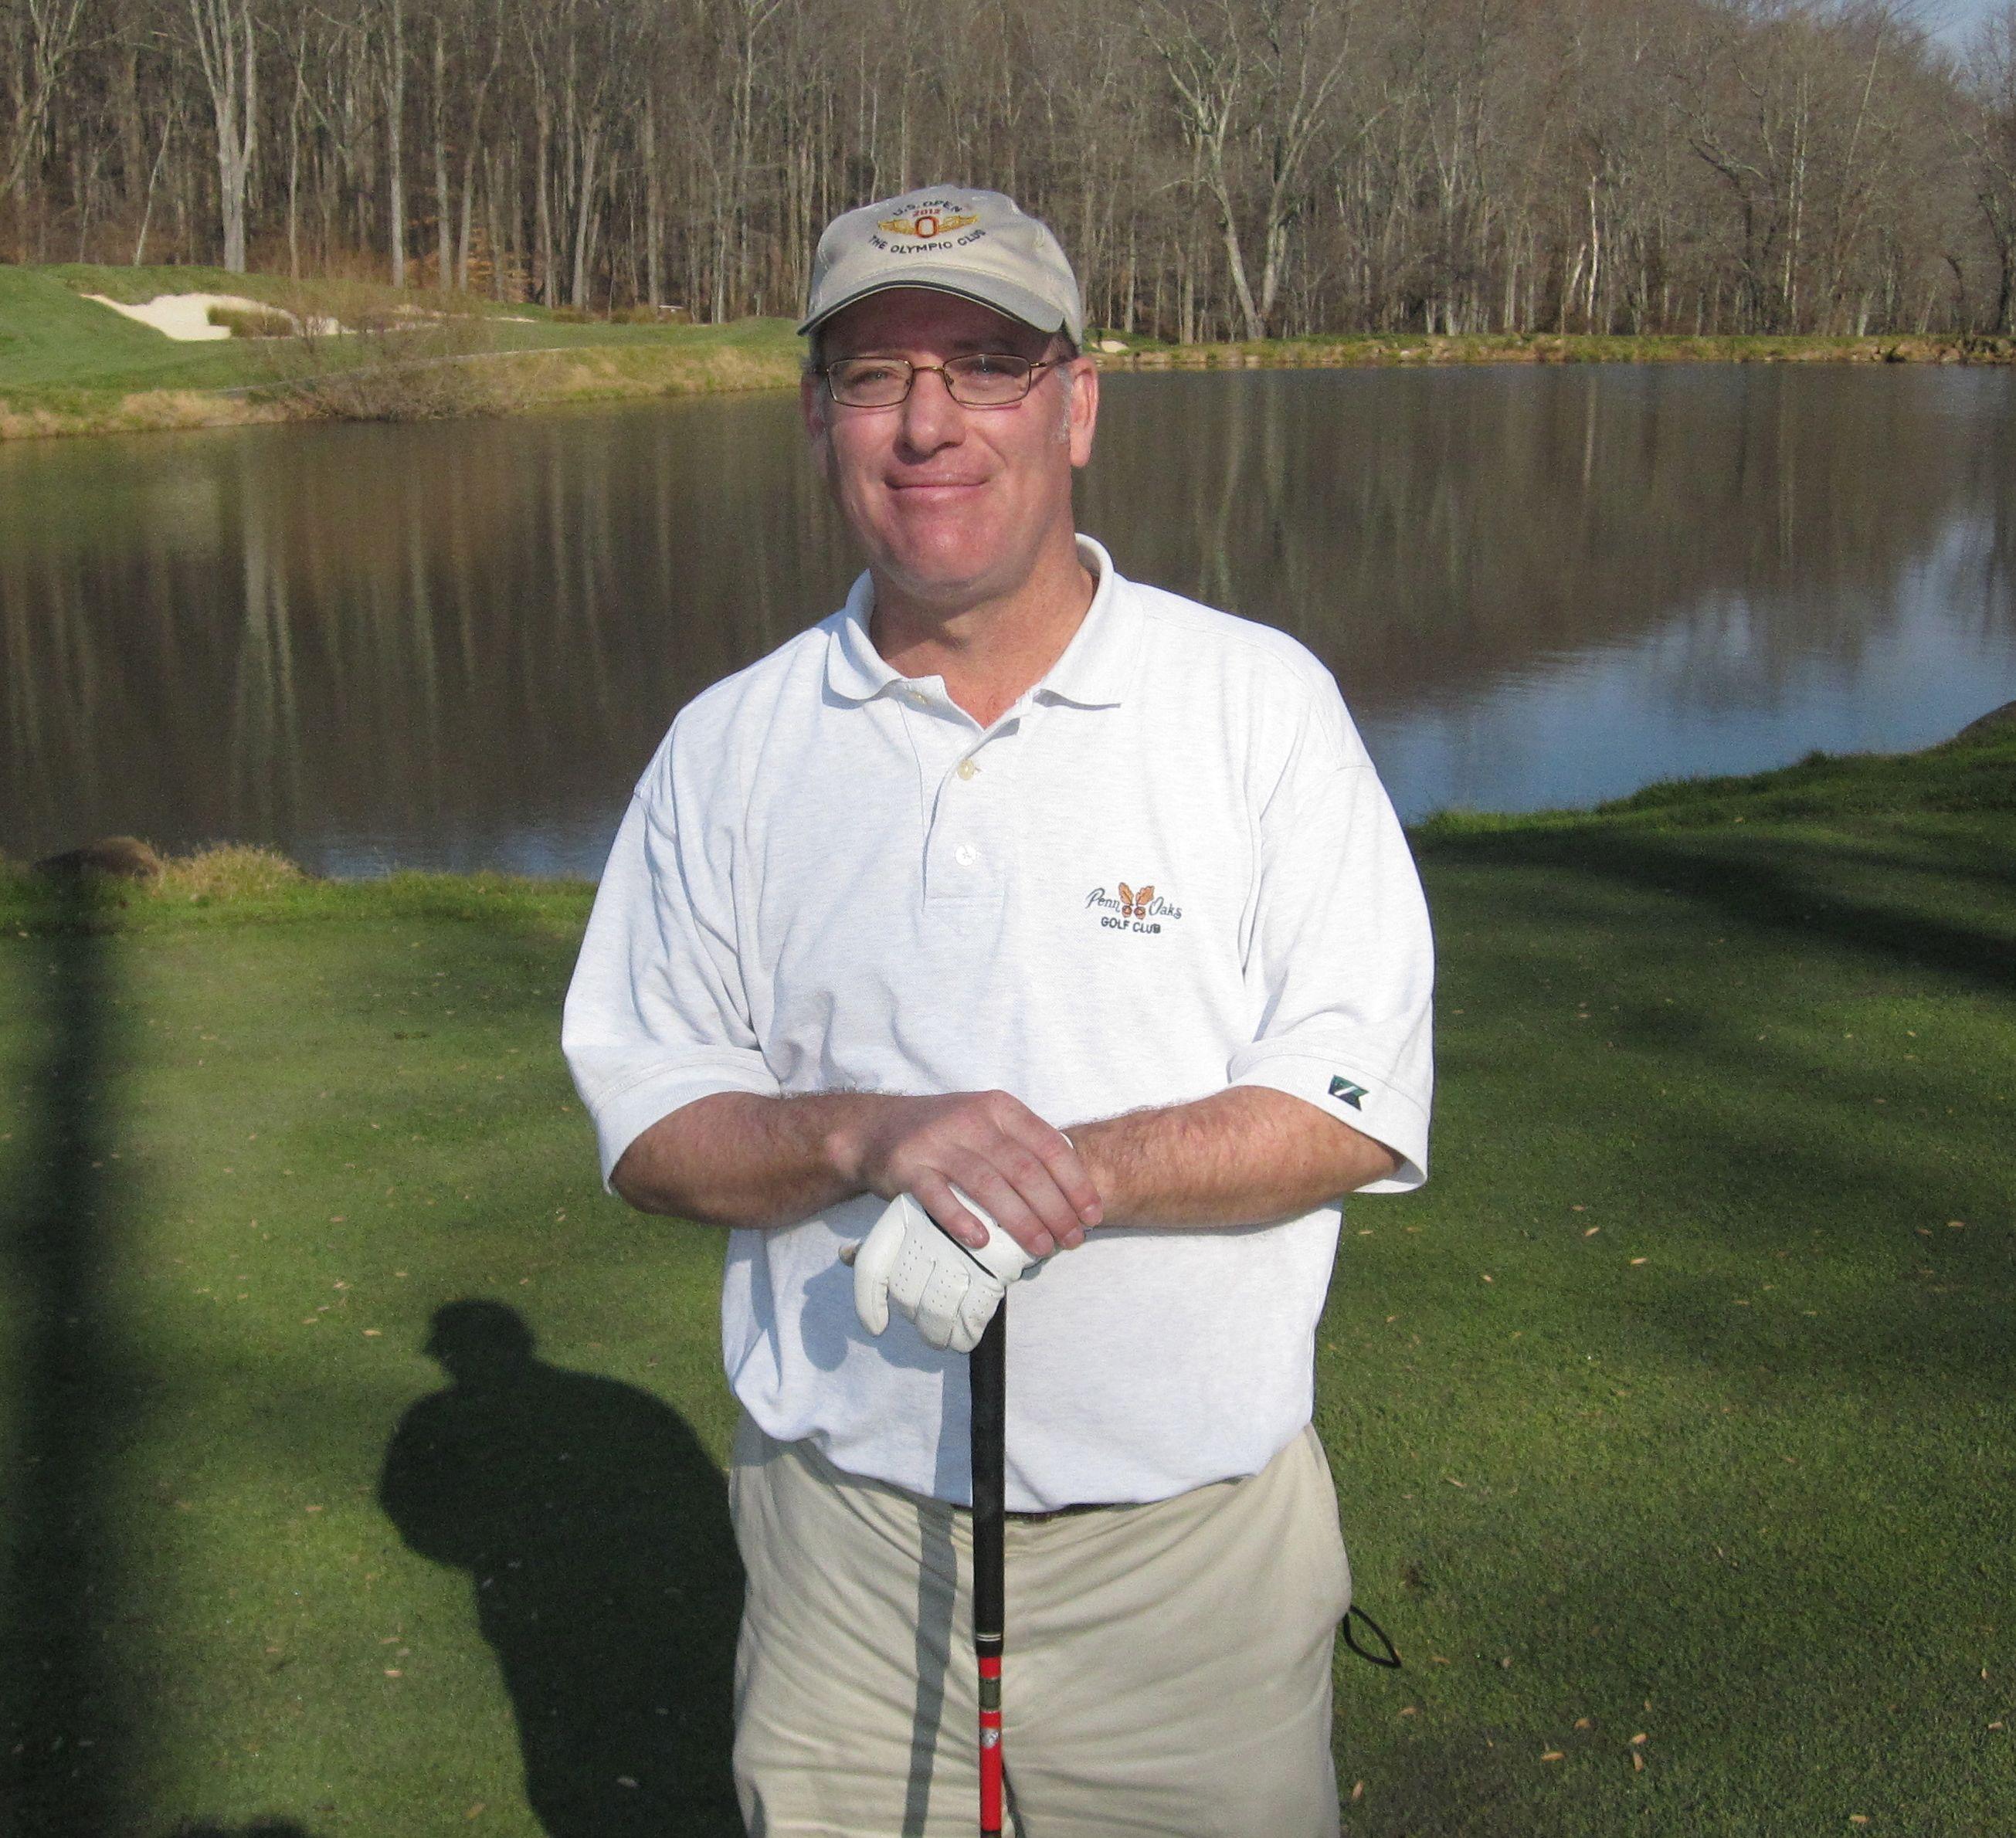 Earl recommendet amateur golf Philadelphia